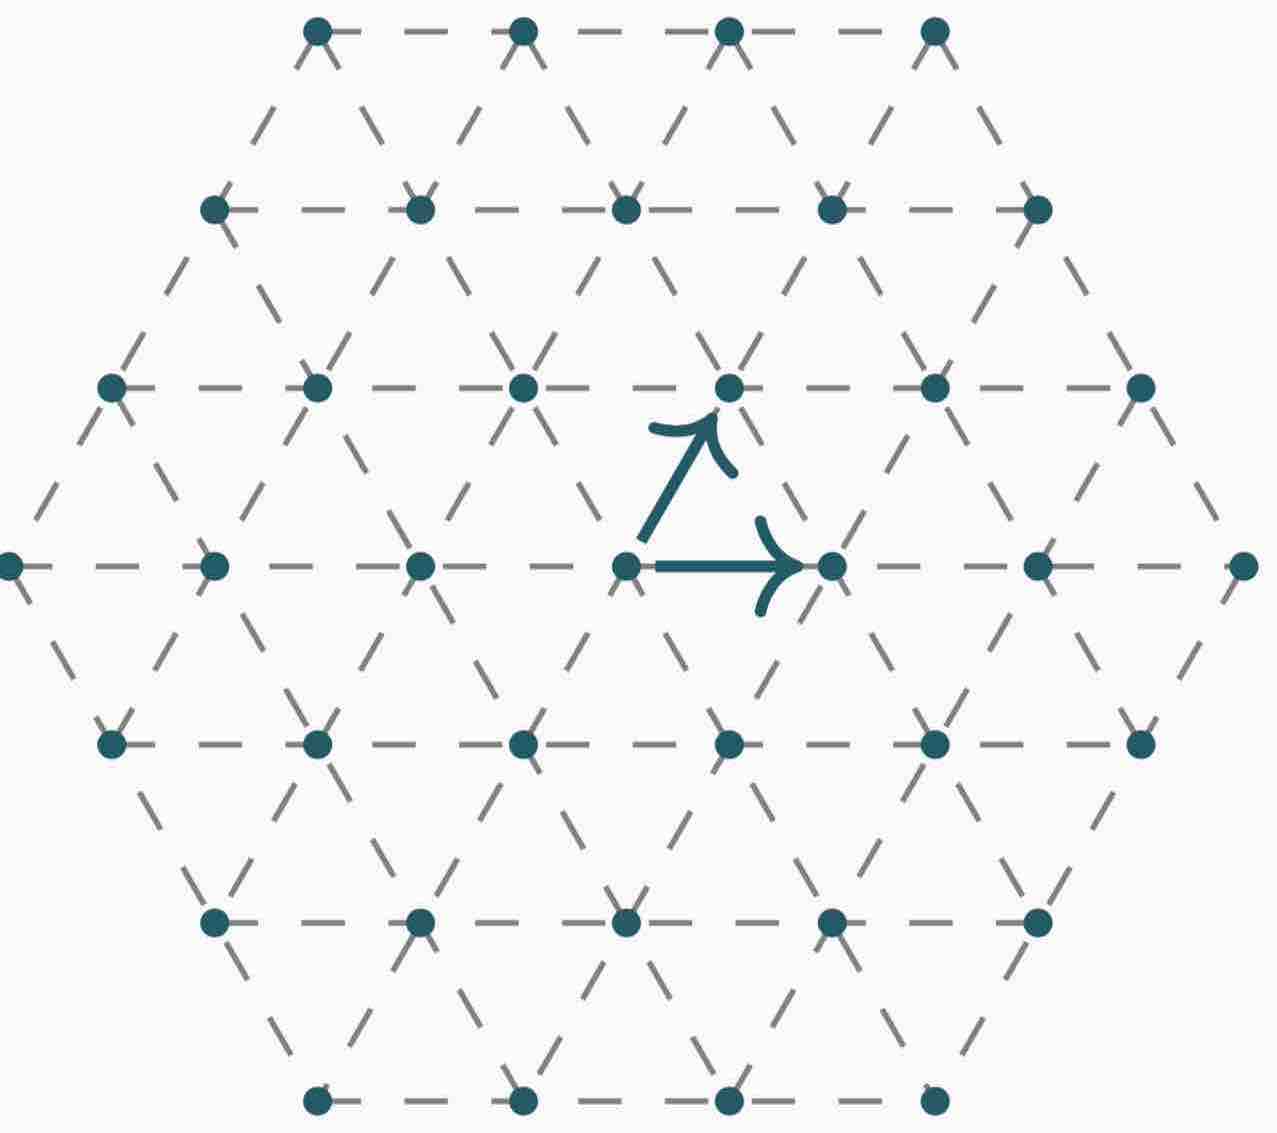 Hexagonal Lattice